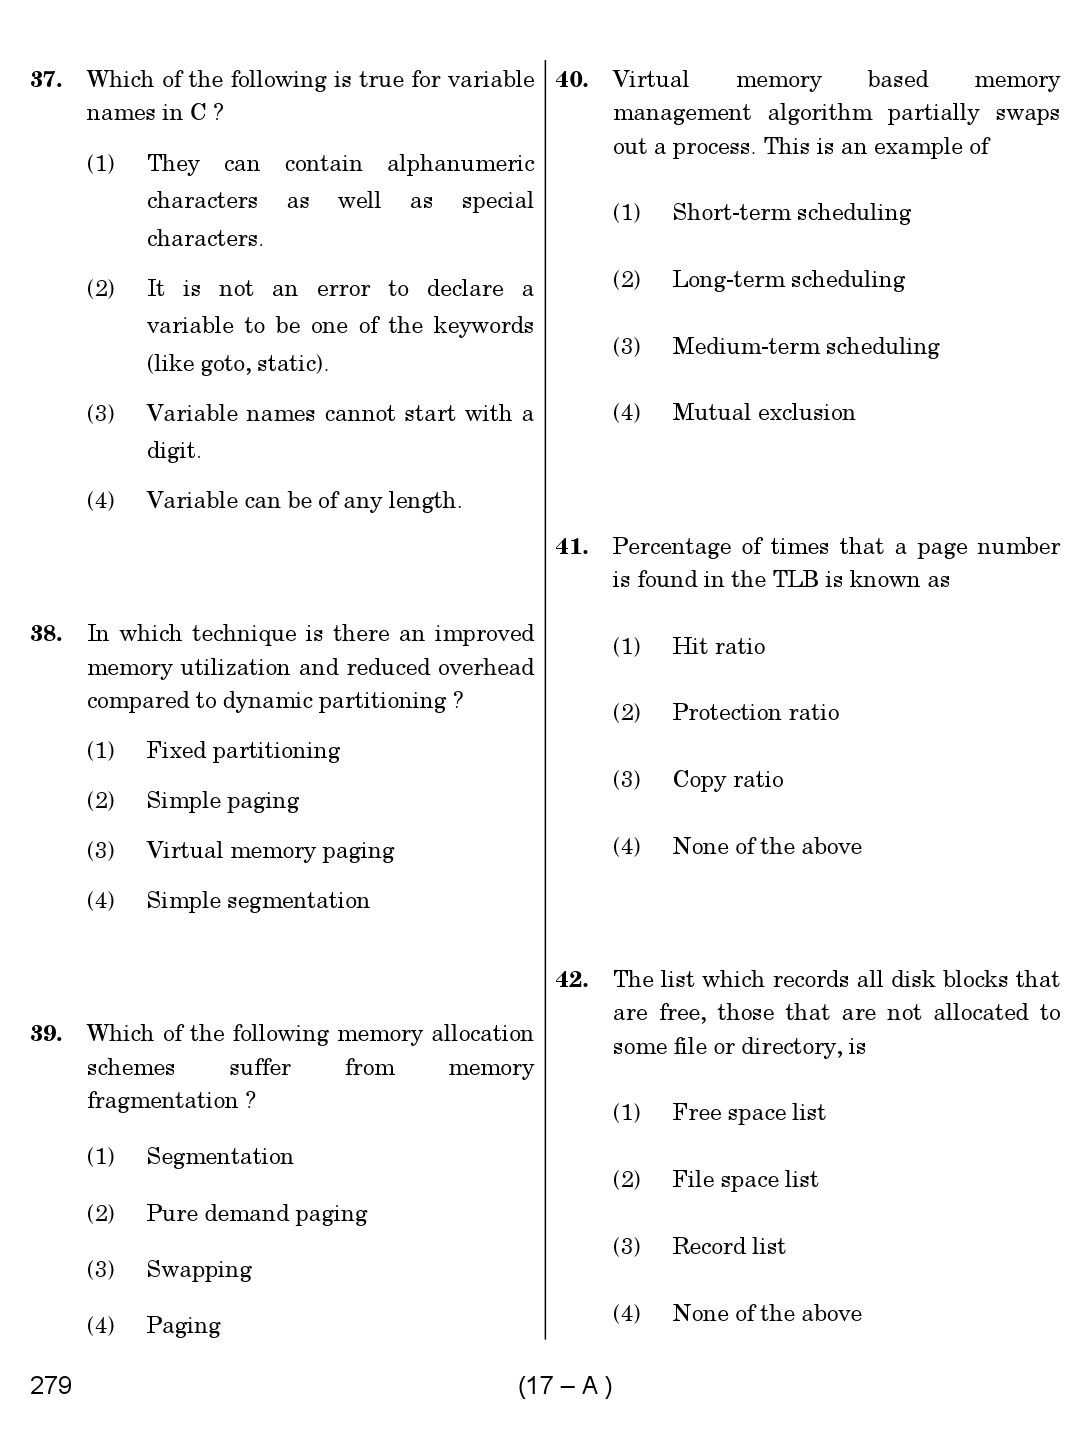 Karnataka PSC Computer Science Teachers Exam Sample Question Paper Subject code 279 17